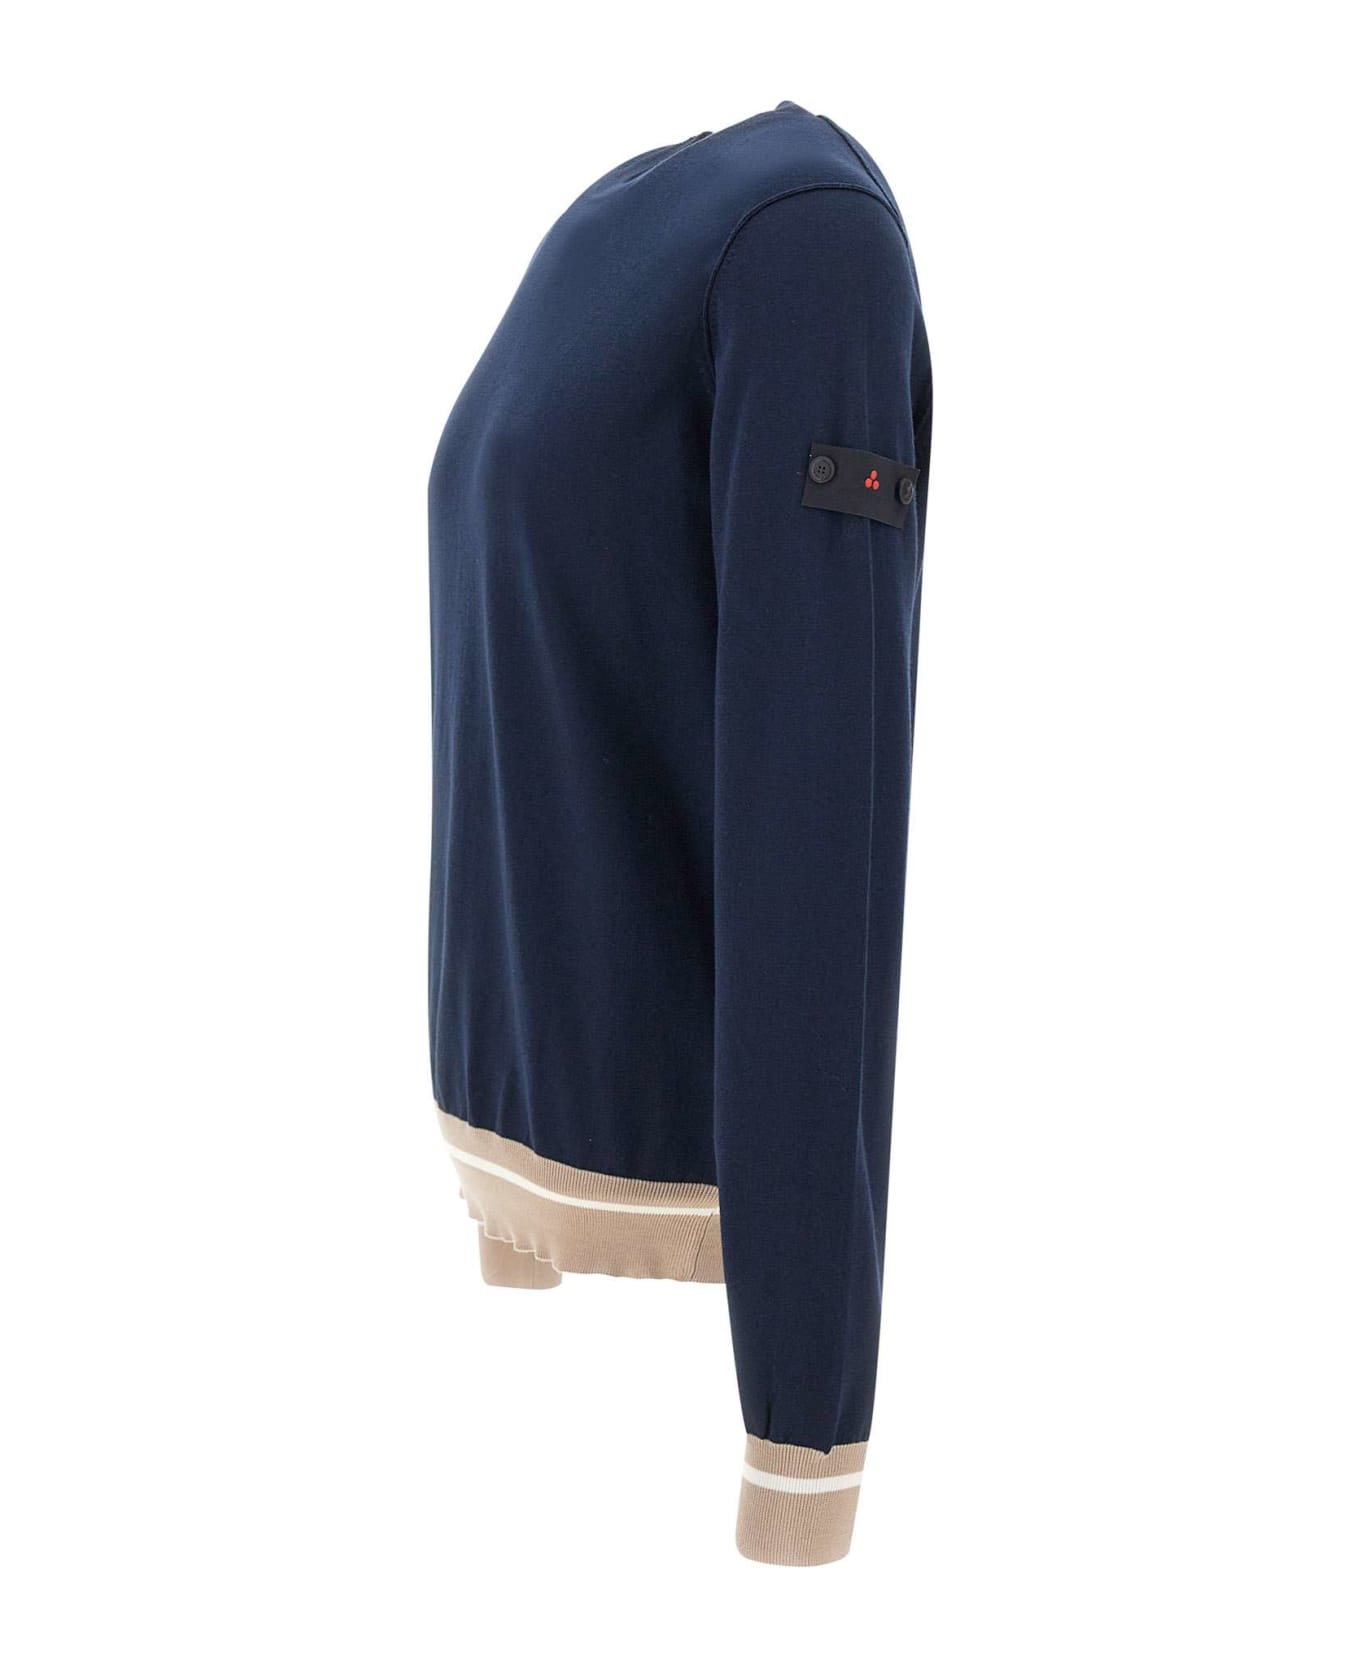 Peuterey "ghisallo" Cotton Sweater - BLUE